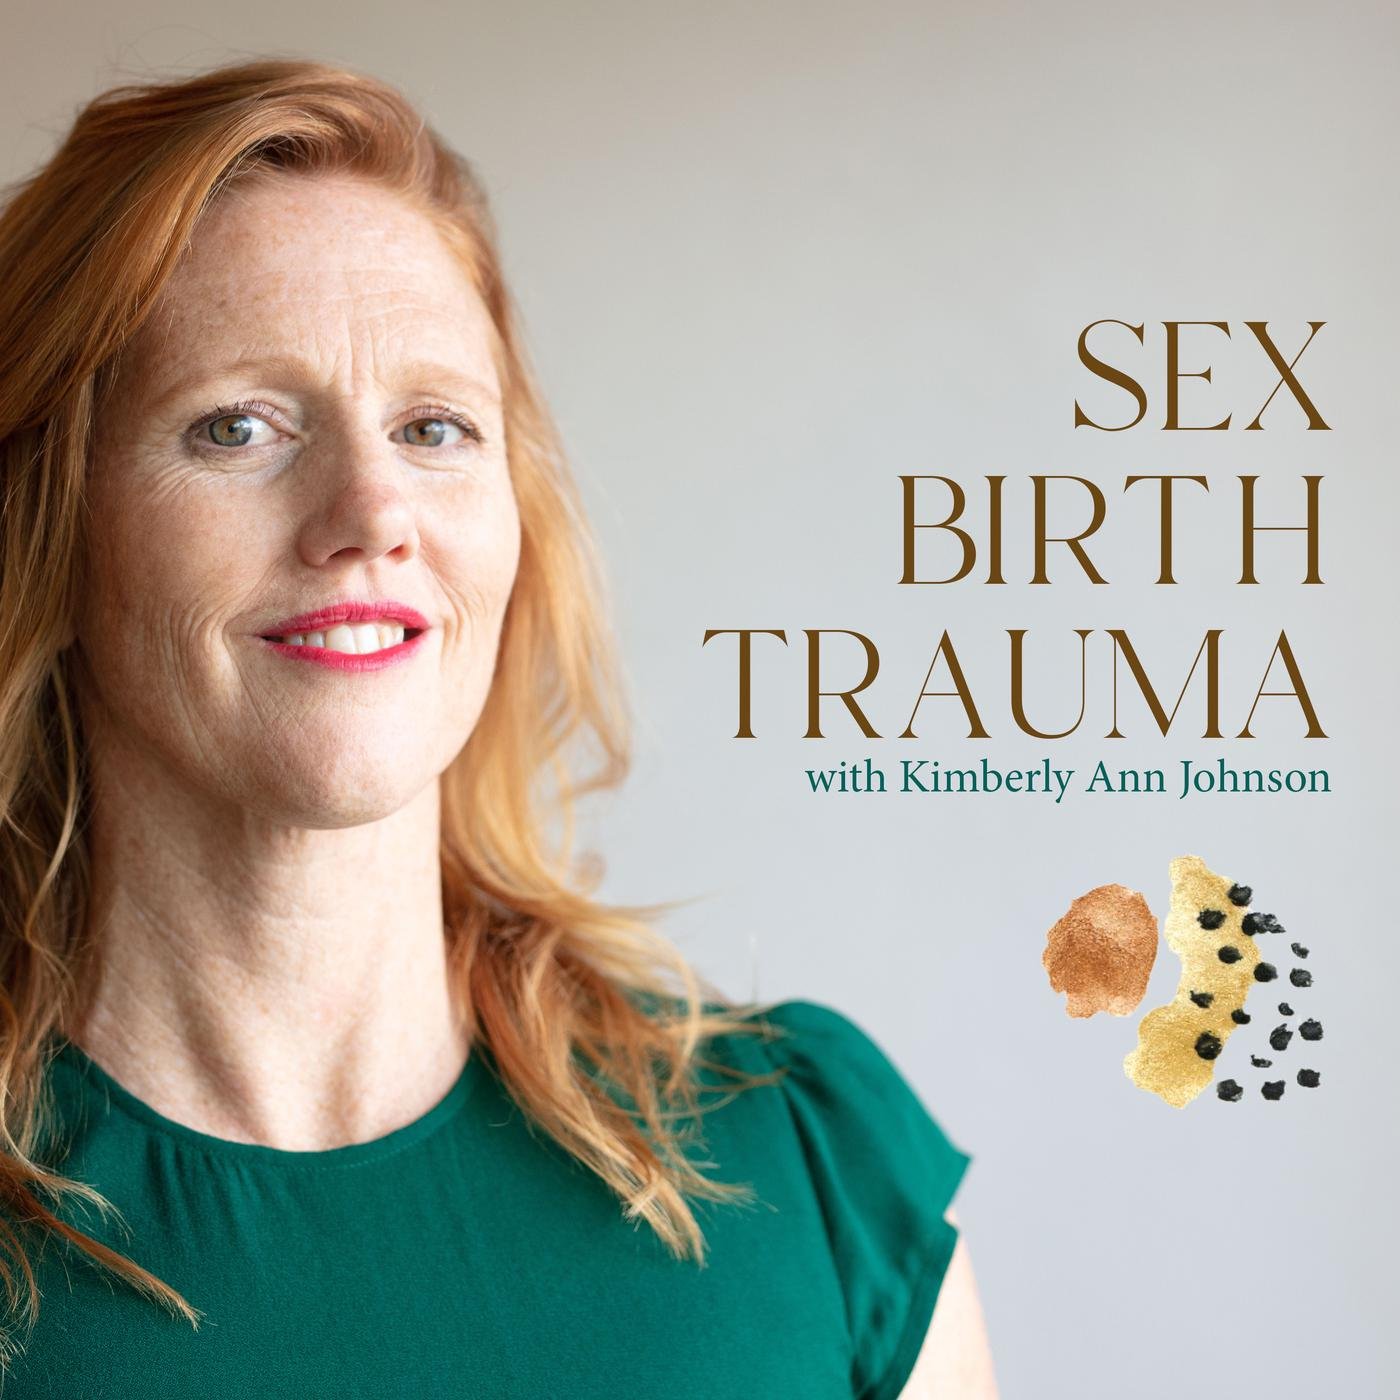 sex-birth-trauma-with-kimberly-ann-johnson-y1upJ2riDUK-0m25ADUvnyP.1400x1400.jpeg